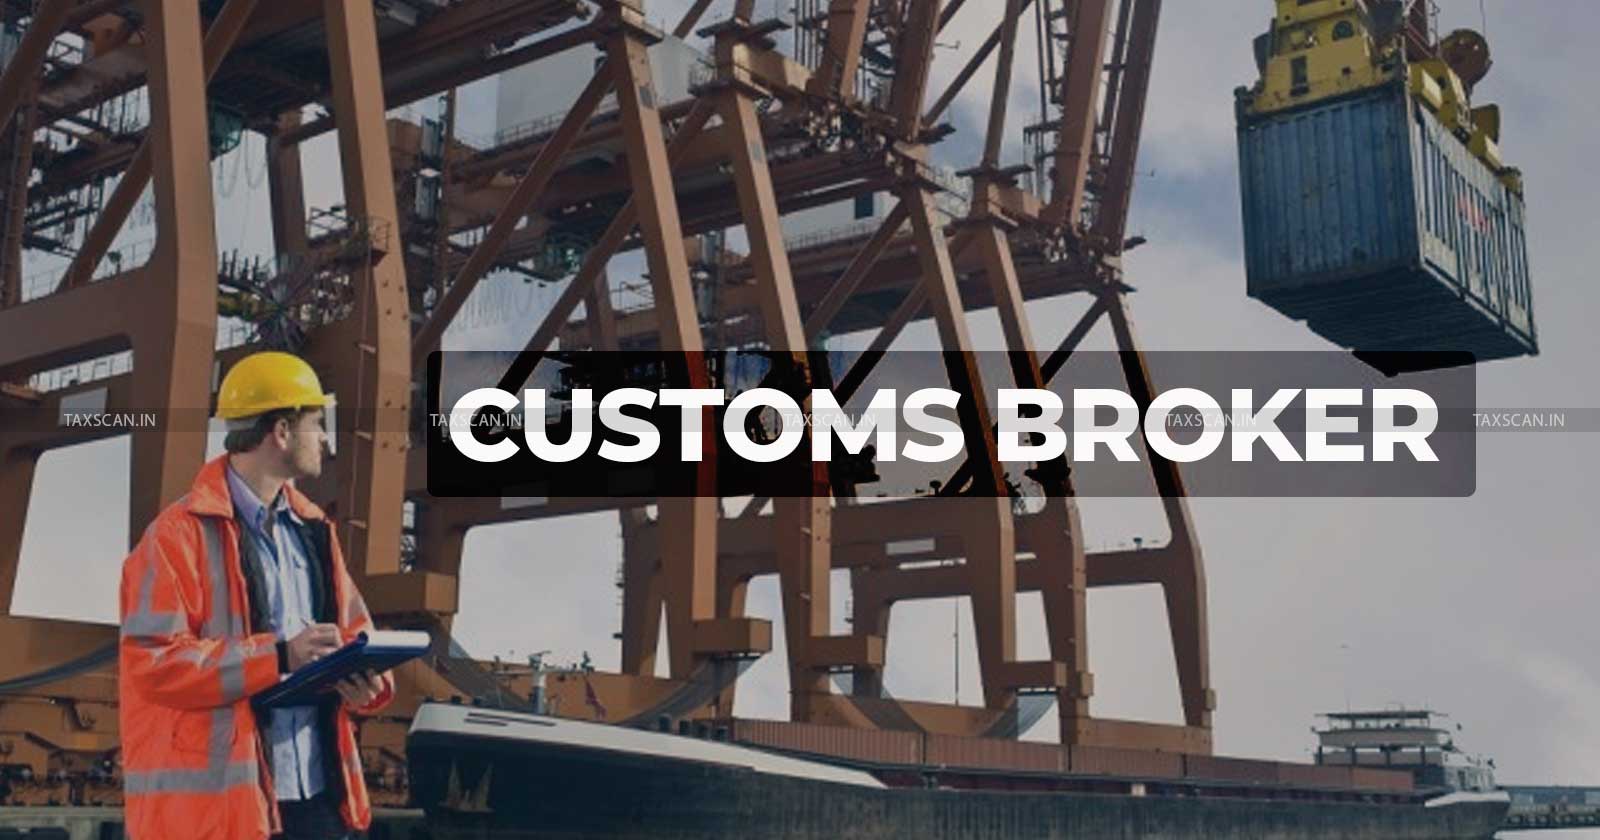 CESTAT urges Customs Brokers - Customs Brokers - CESTAT - fraudulent transactions - taxscan